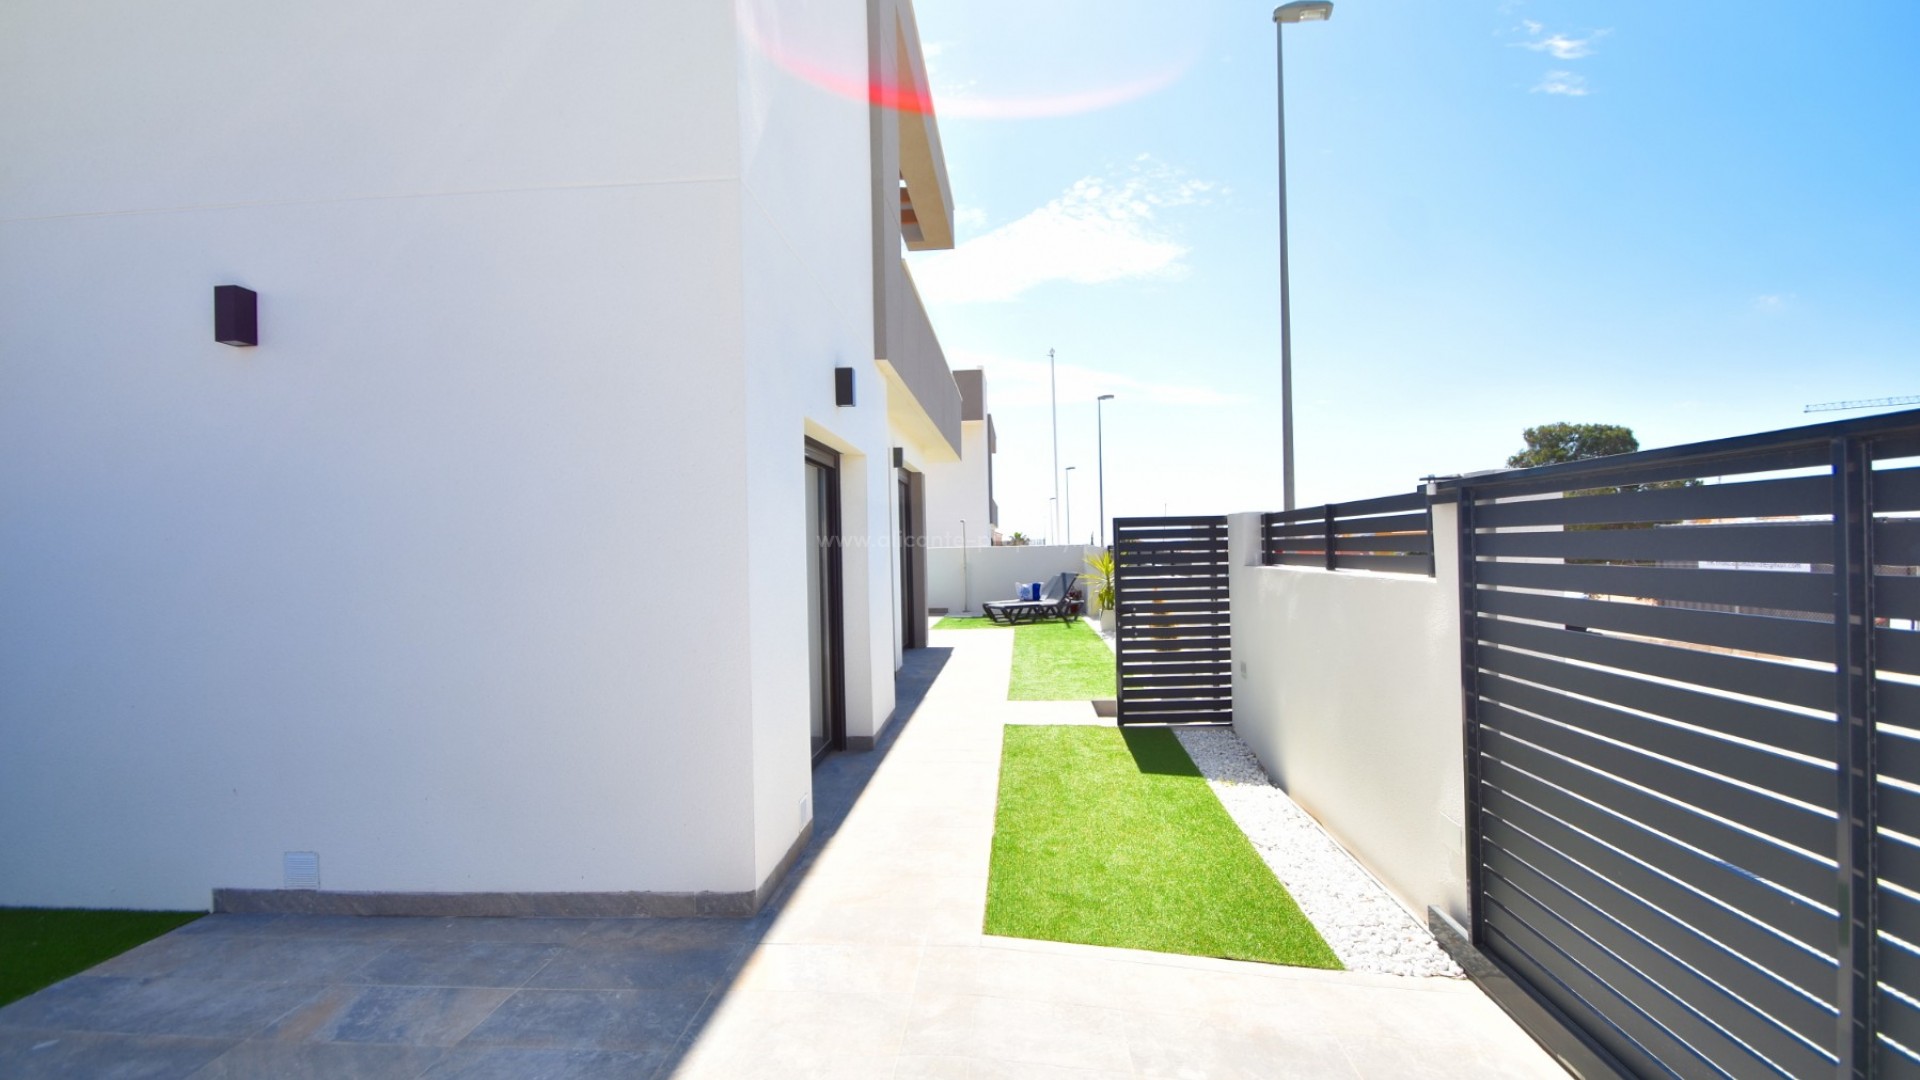 Villa i Los Montesinos, Alicante, huset har 104,7 m2, 3 soverom, 2 bad, terrasse på 30 m2, 30 minutter med bil fra Alicante flyplass, 10 min til strand.